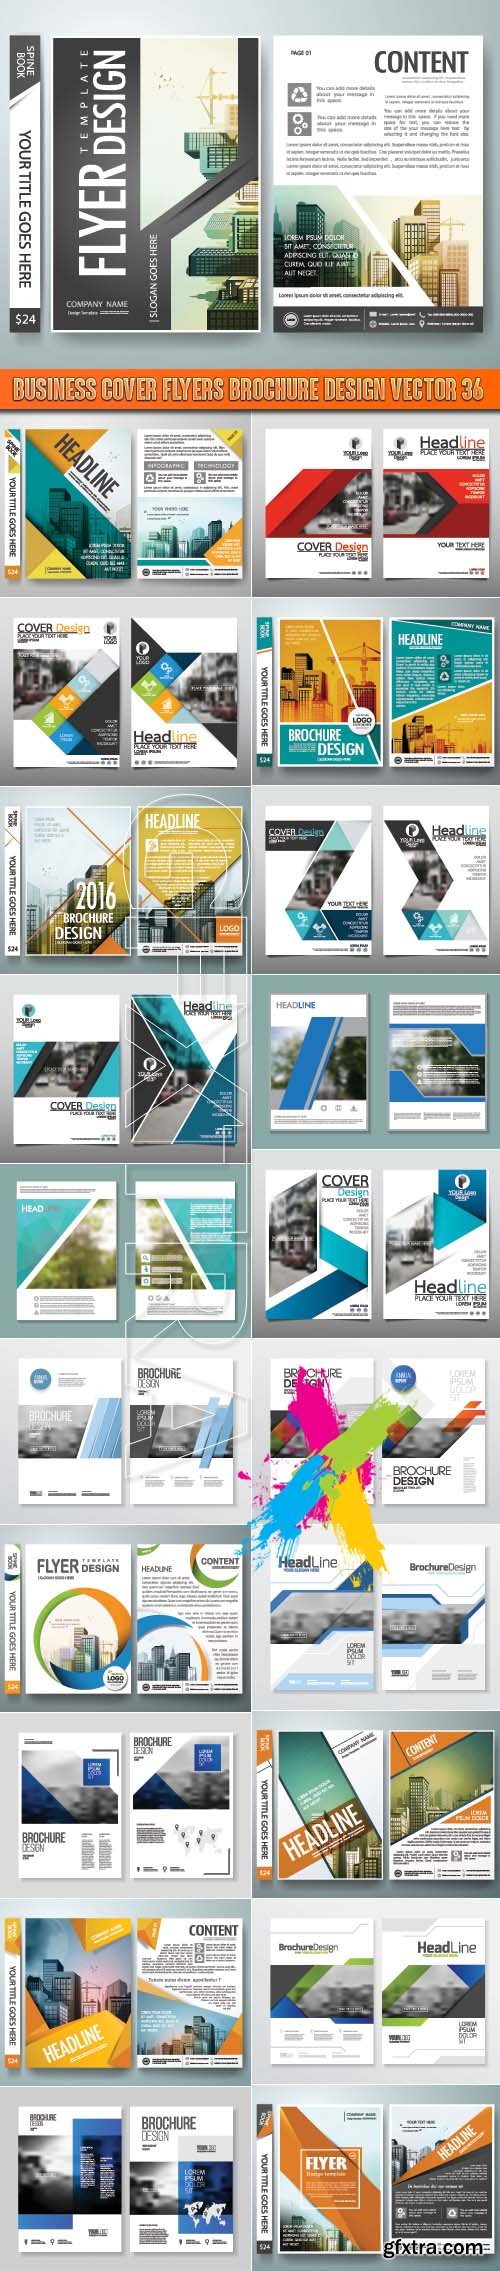 Business cover flyers brochure design vector 36